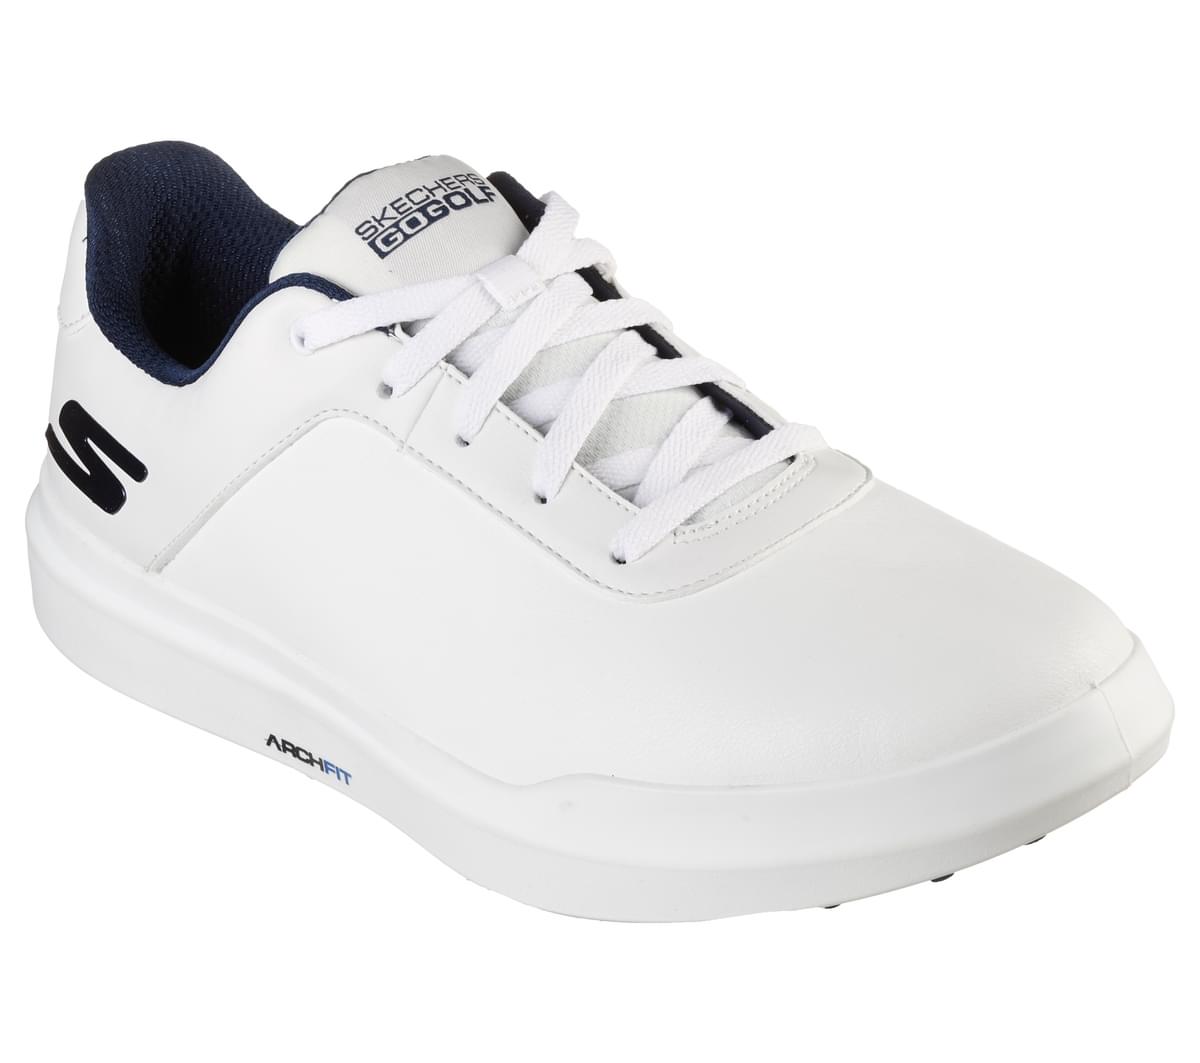 Skechers Go Golf Drive 5 Spikeless Golf Shoe 214037 White / Navy 7 